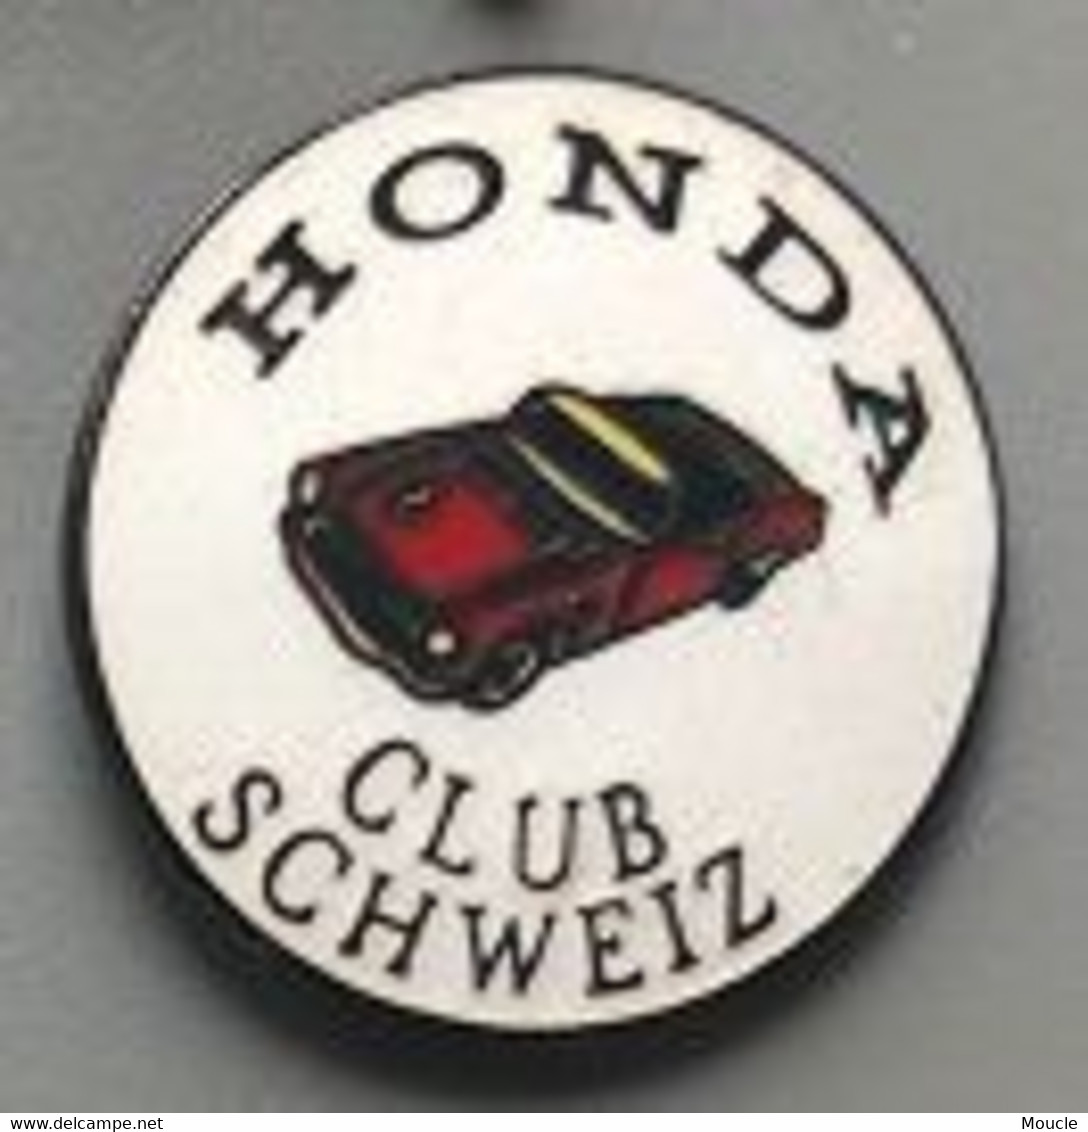 HONDA CLUB SCHWEIZ - SUISSE - SWITZERLAND - SVIZZERA - VOITURE - CAR - AUTOMOBILE - AUTO -      (31) - Honda